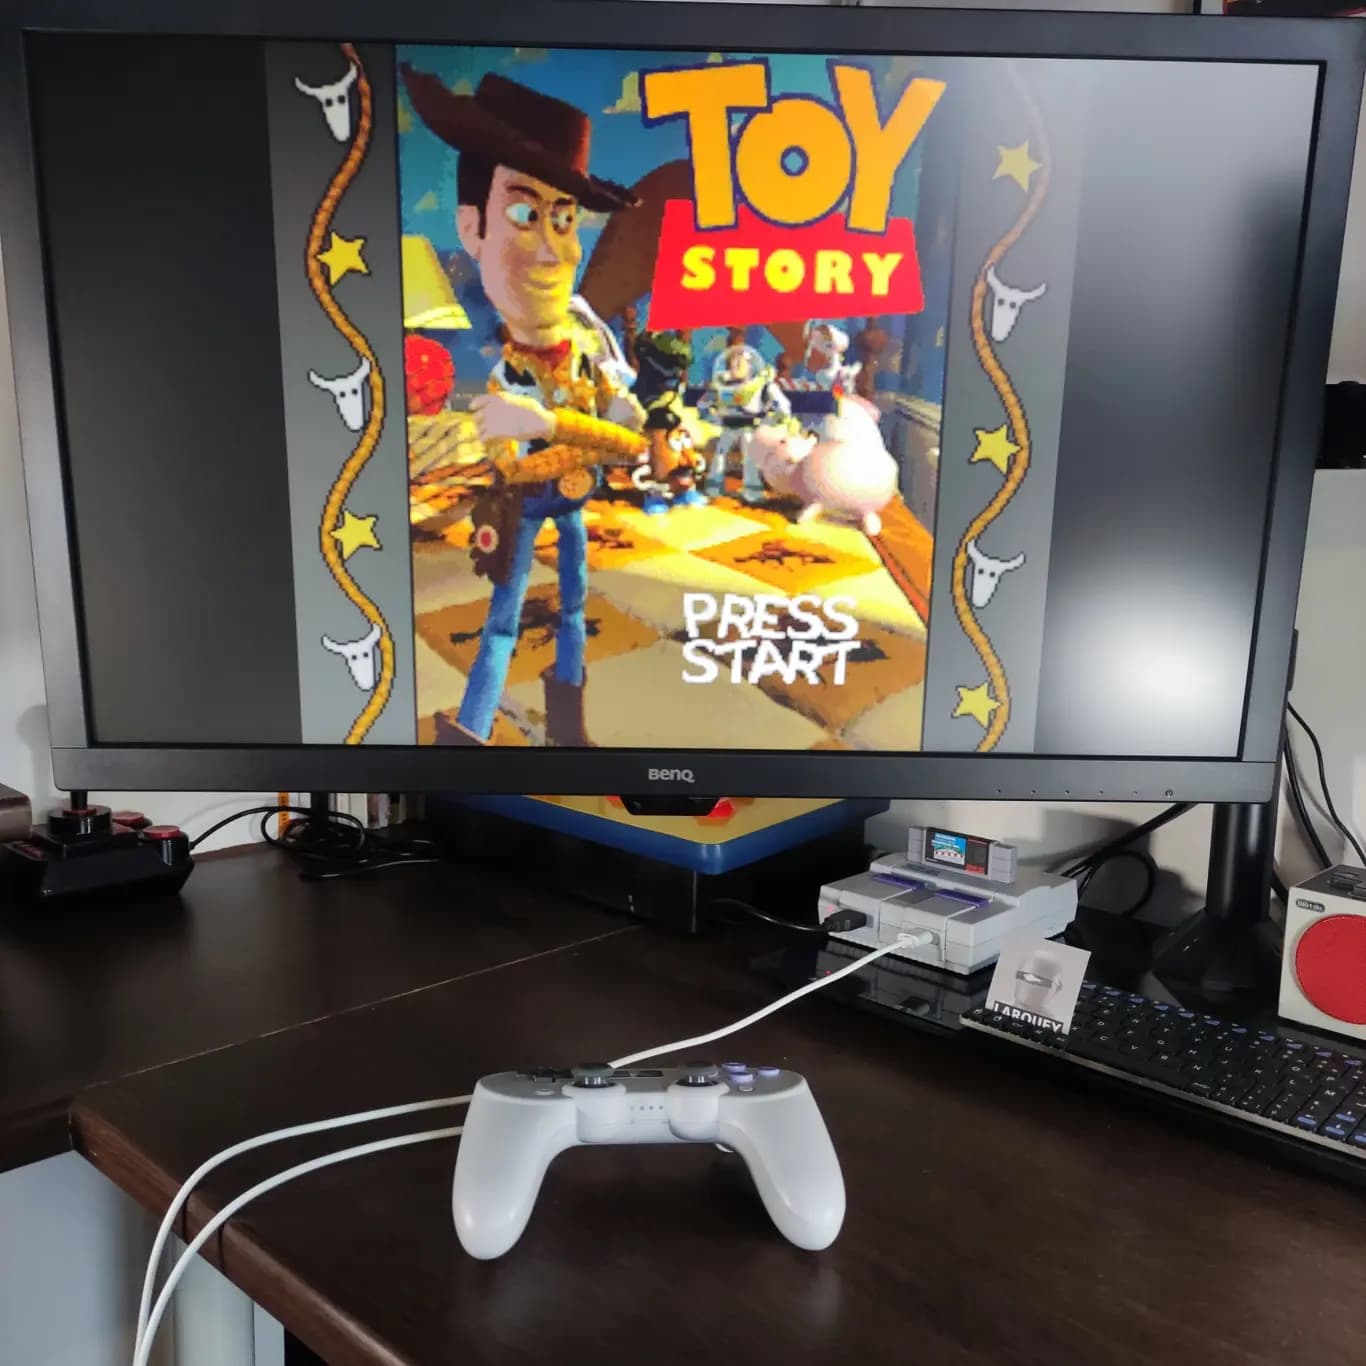 Larquey: Toy Story [Total Stars/Deputy] (Sega Genesis / MegaDrive Emulated) 99 points on 2022-09-15 06:52:13